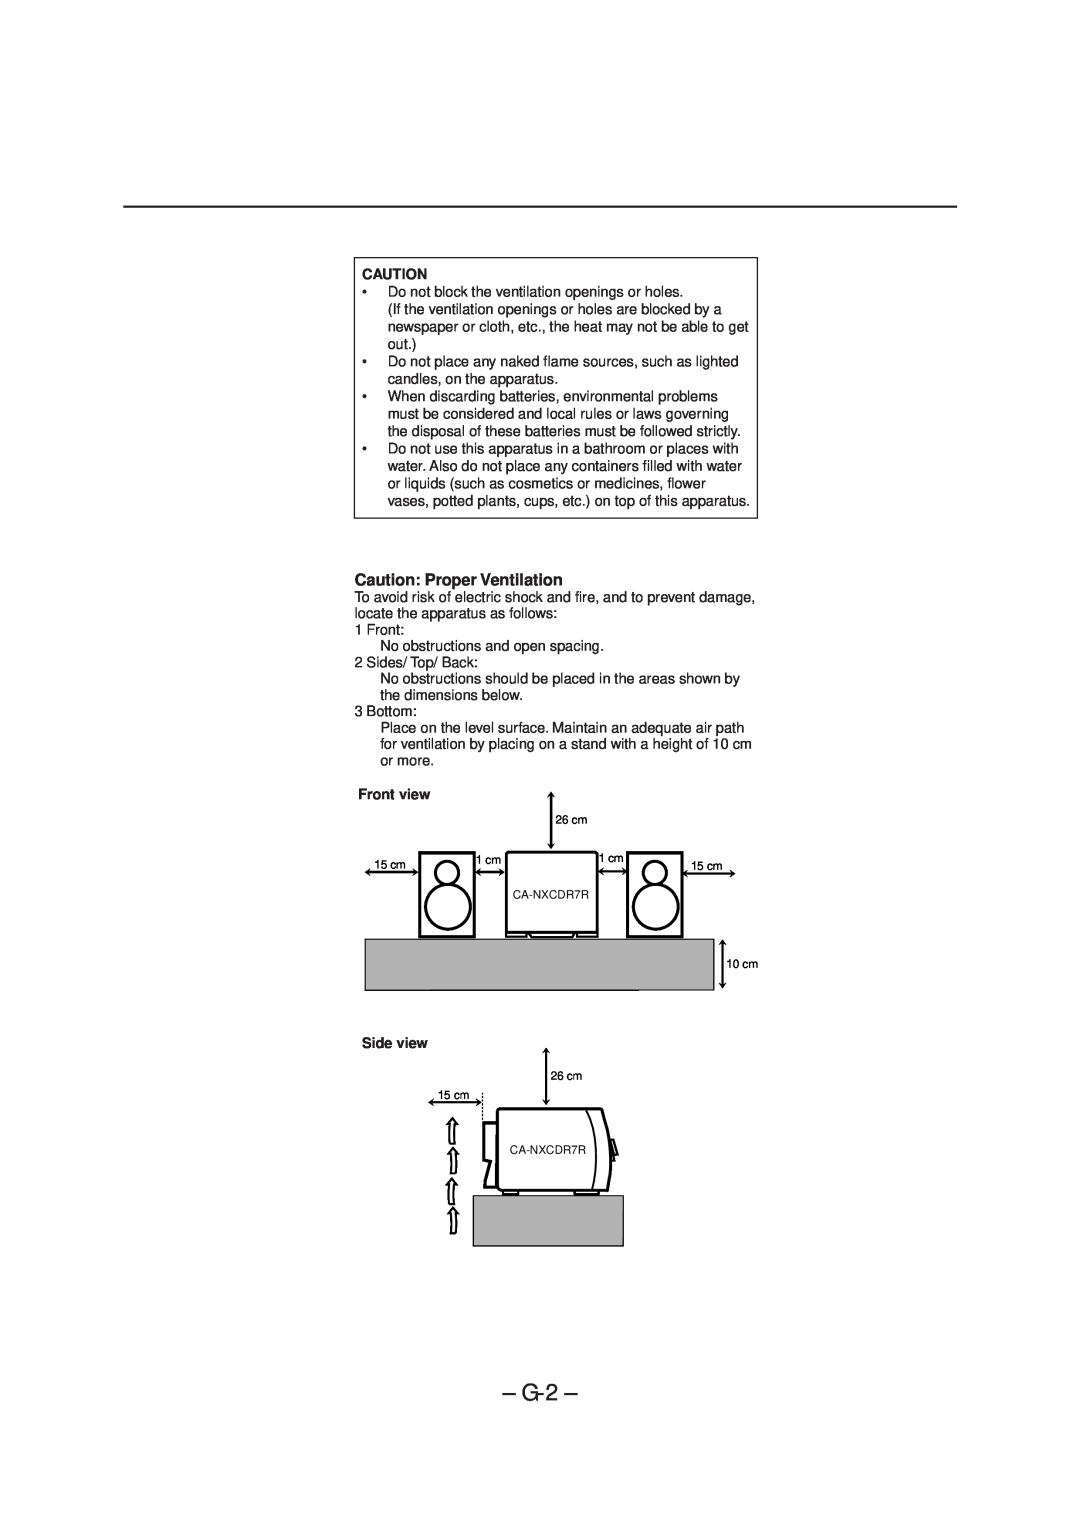 JVC CA-NXCDR7R, LVT0749-003A manual G-2, Caution Proper Ventilation, Front view, Side view 